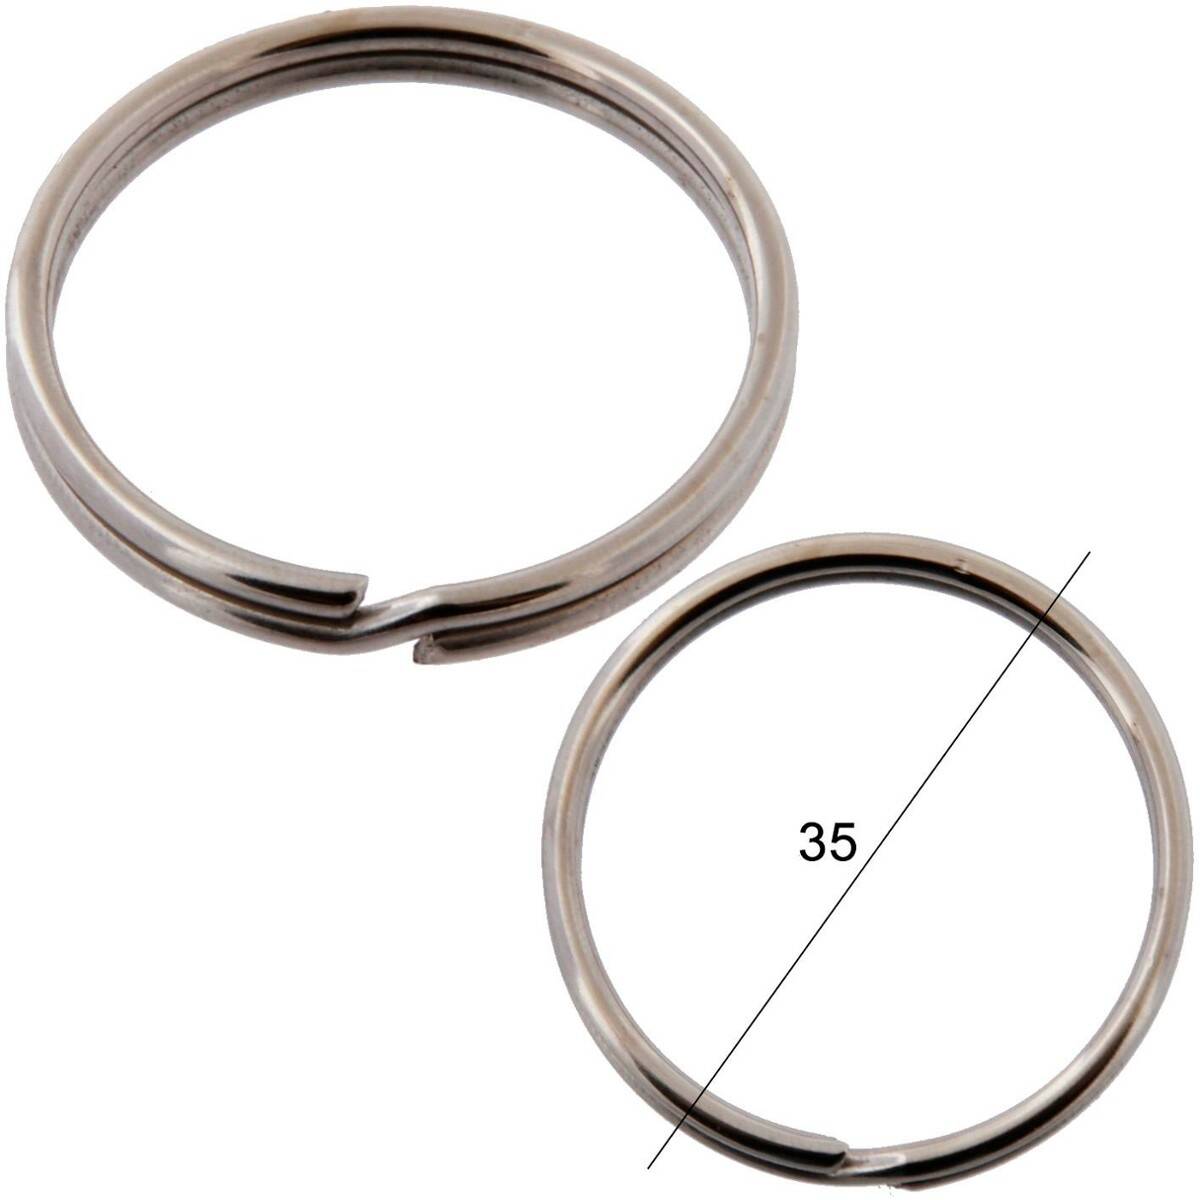 Key rings standard - diameter 35mm